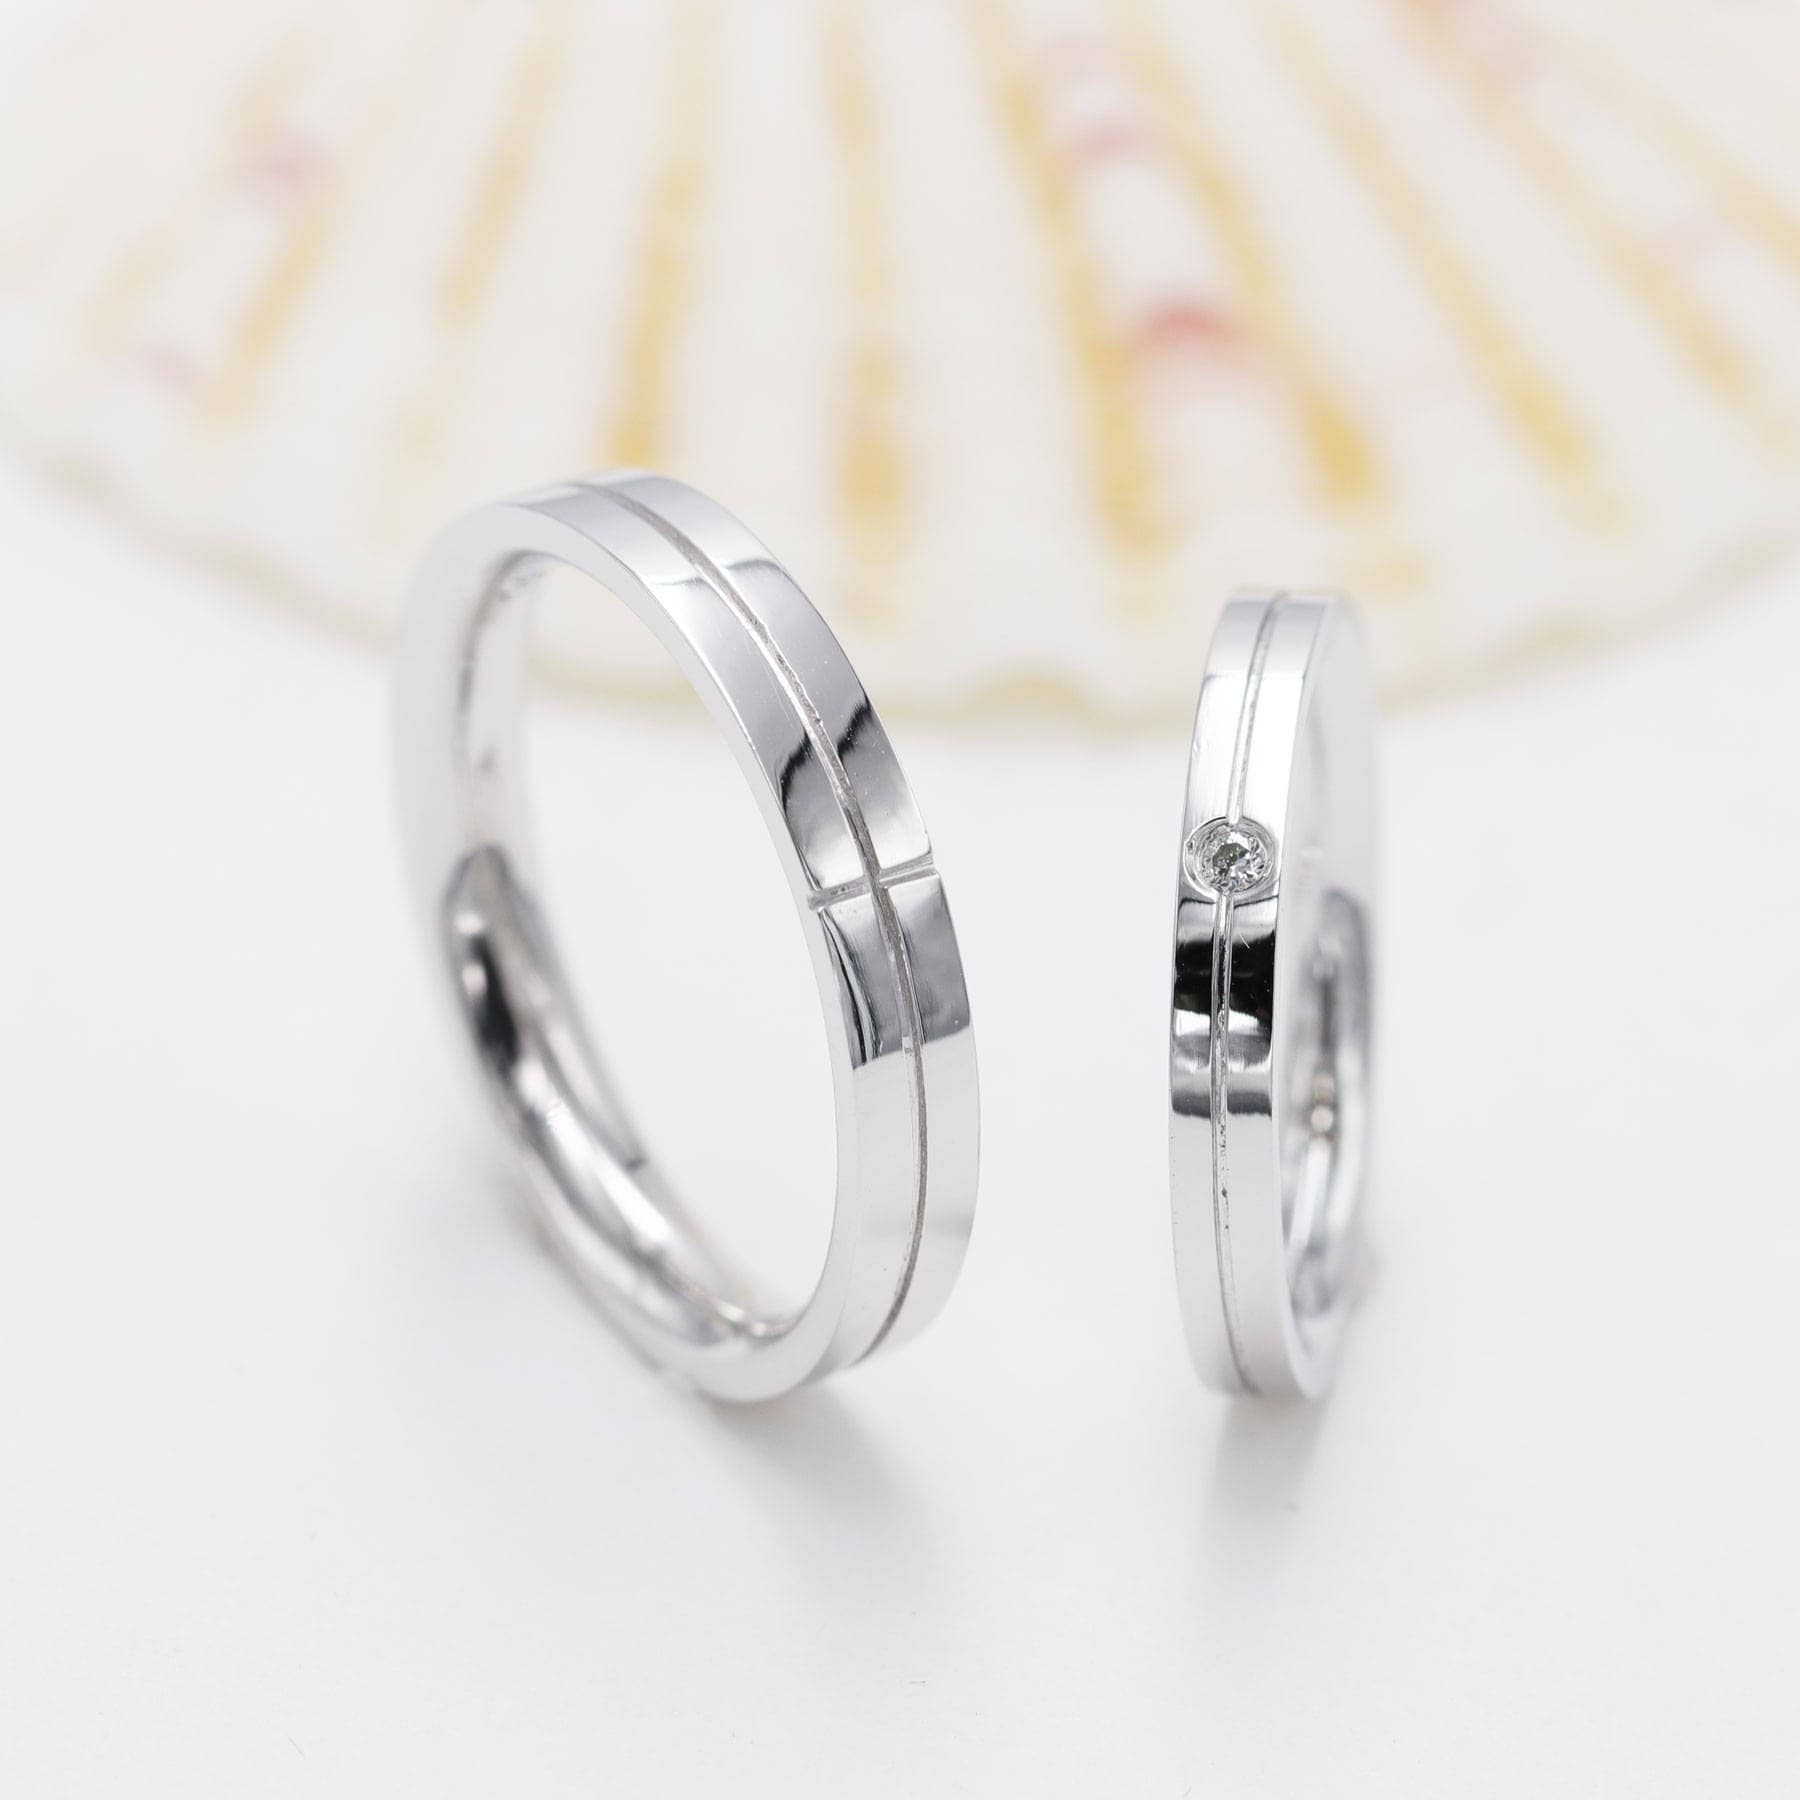 Cz Couple Rings Titanium Mens Band White Gold Filled Women's Wedding Ring  Sets | eBay